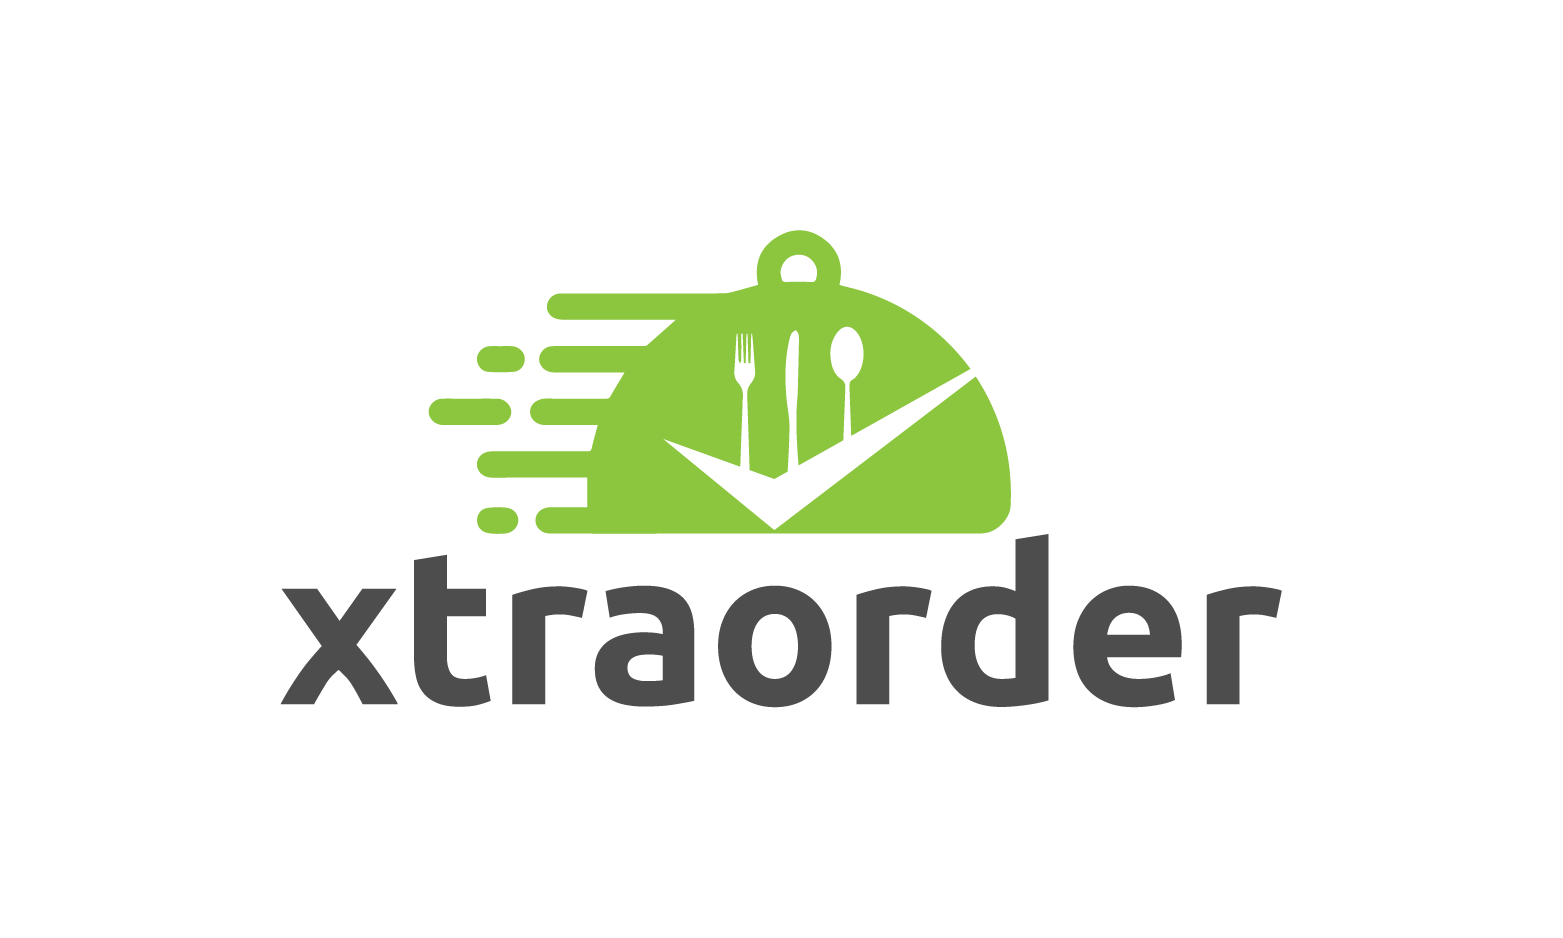 XtraOrder.com - Creative brandable domain for sale